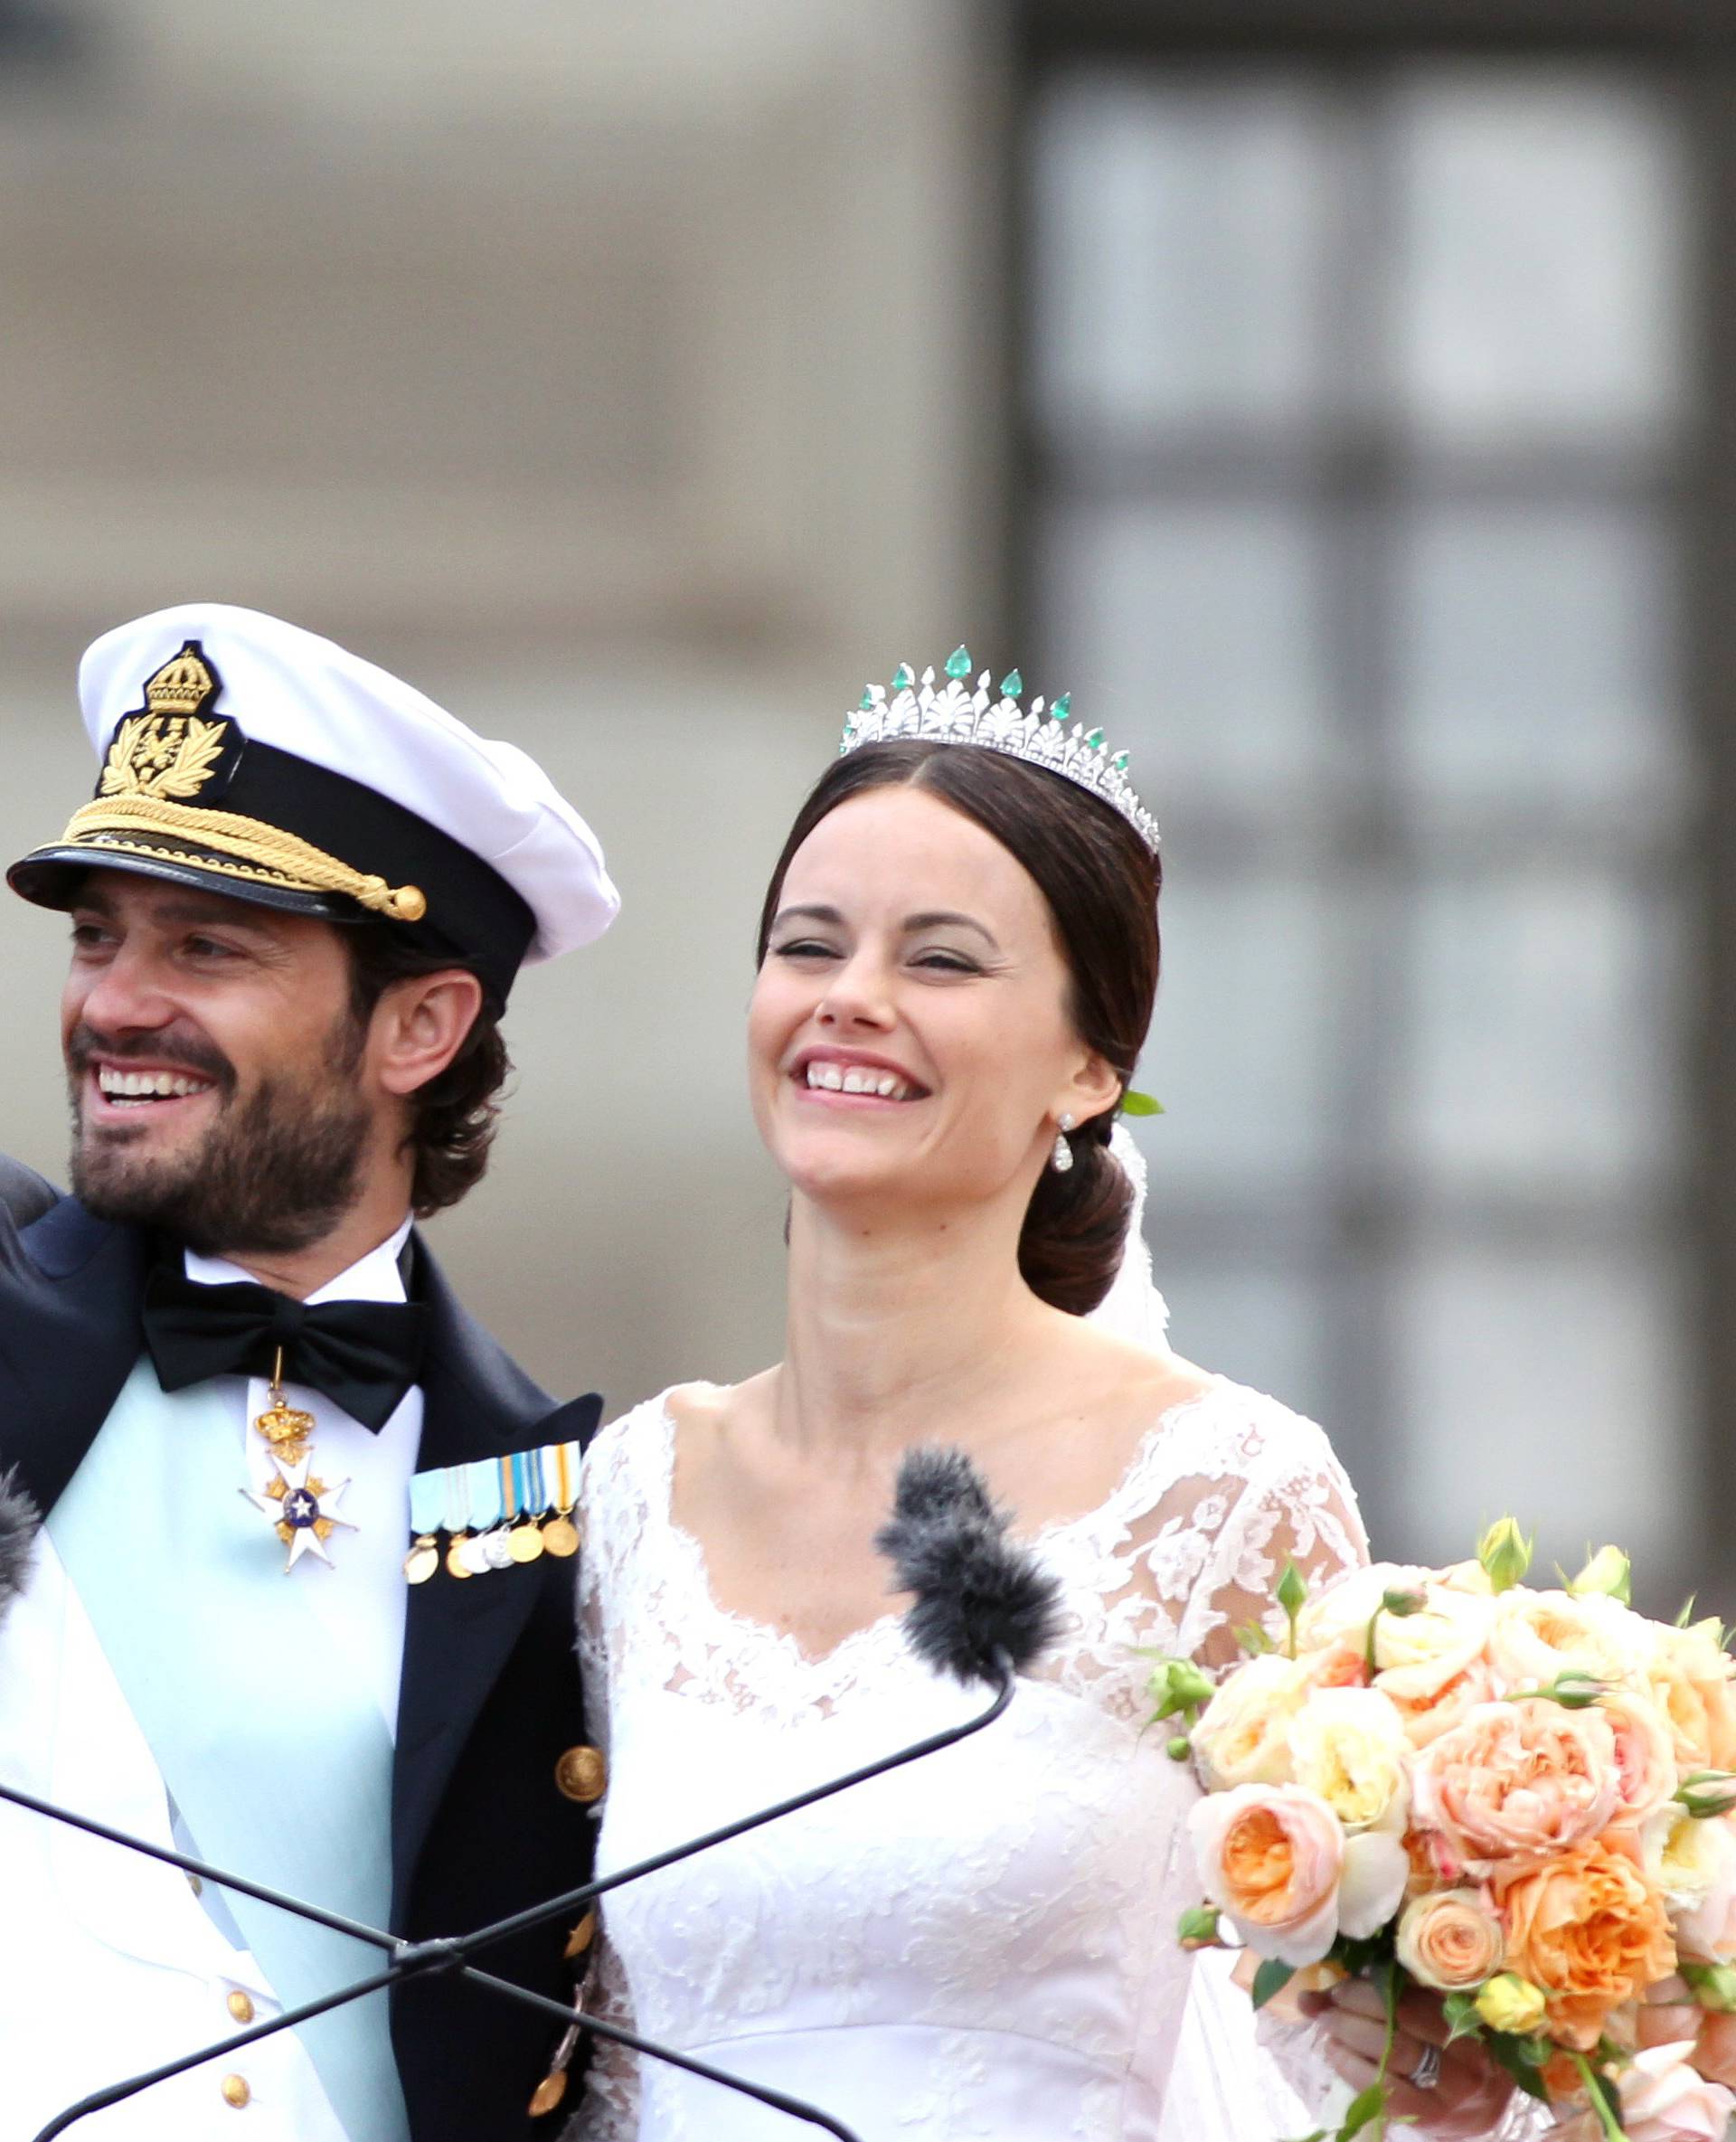 Wedding of Prince Carl Philip of Sweden in Stockholm.